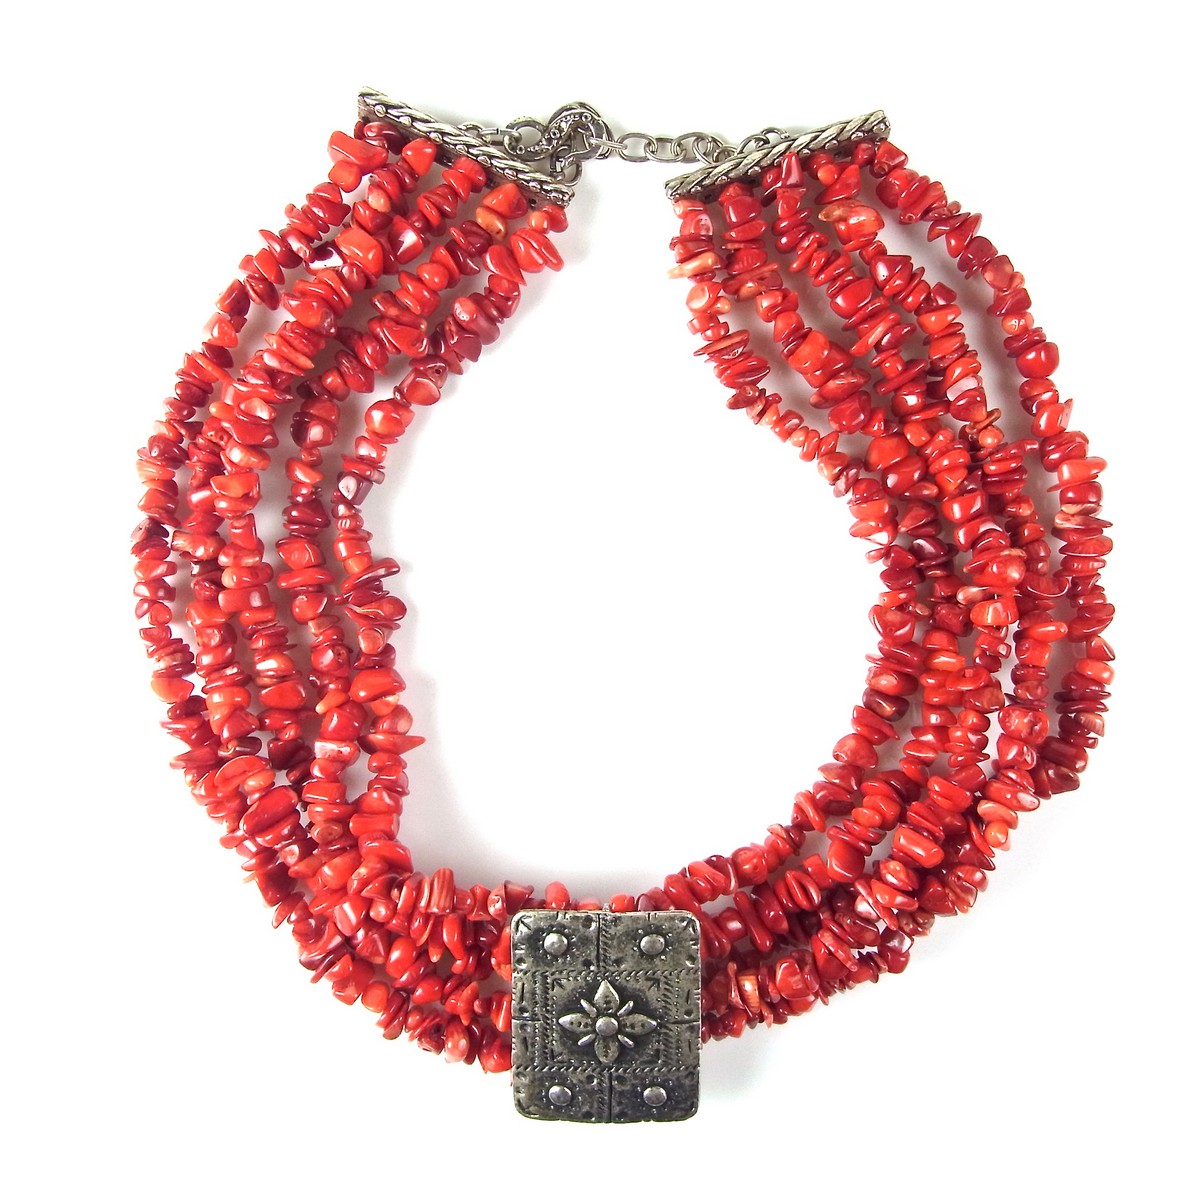 Coral multi-strand necklace by Cesaree, Paris.